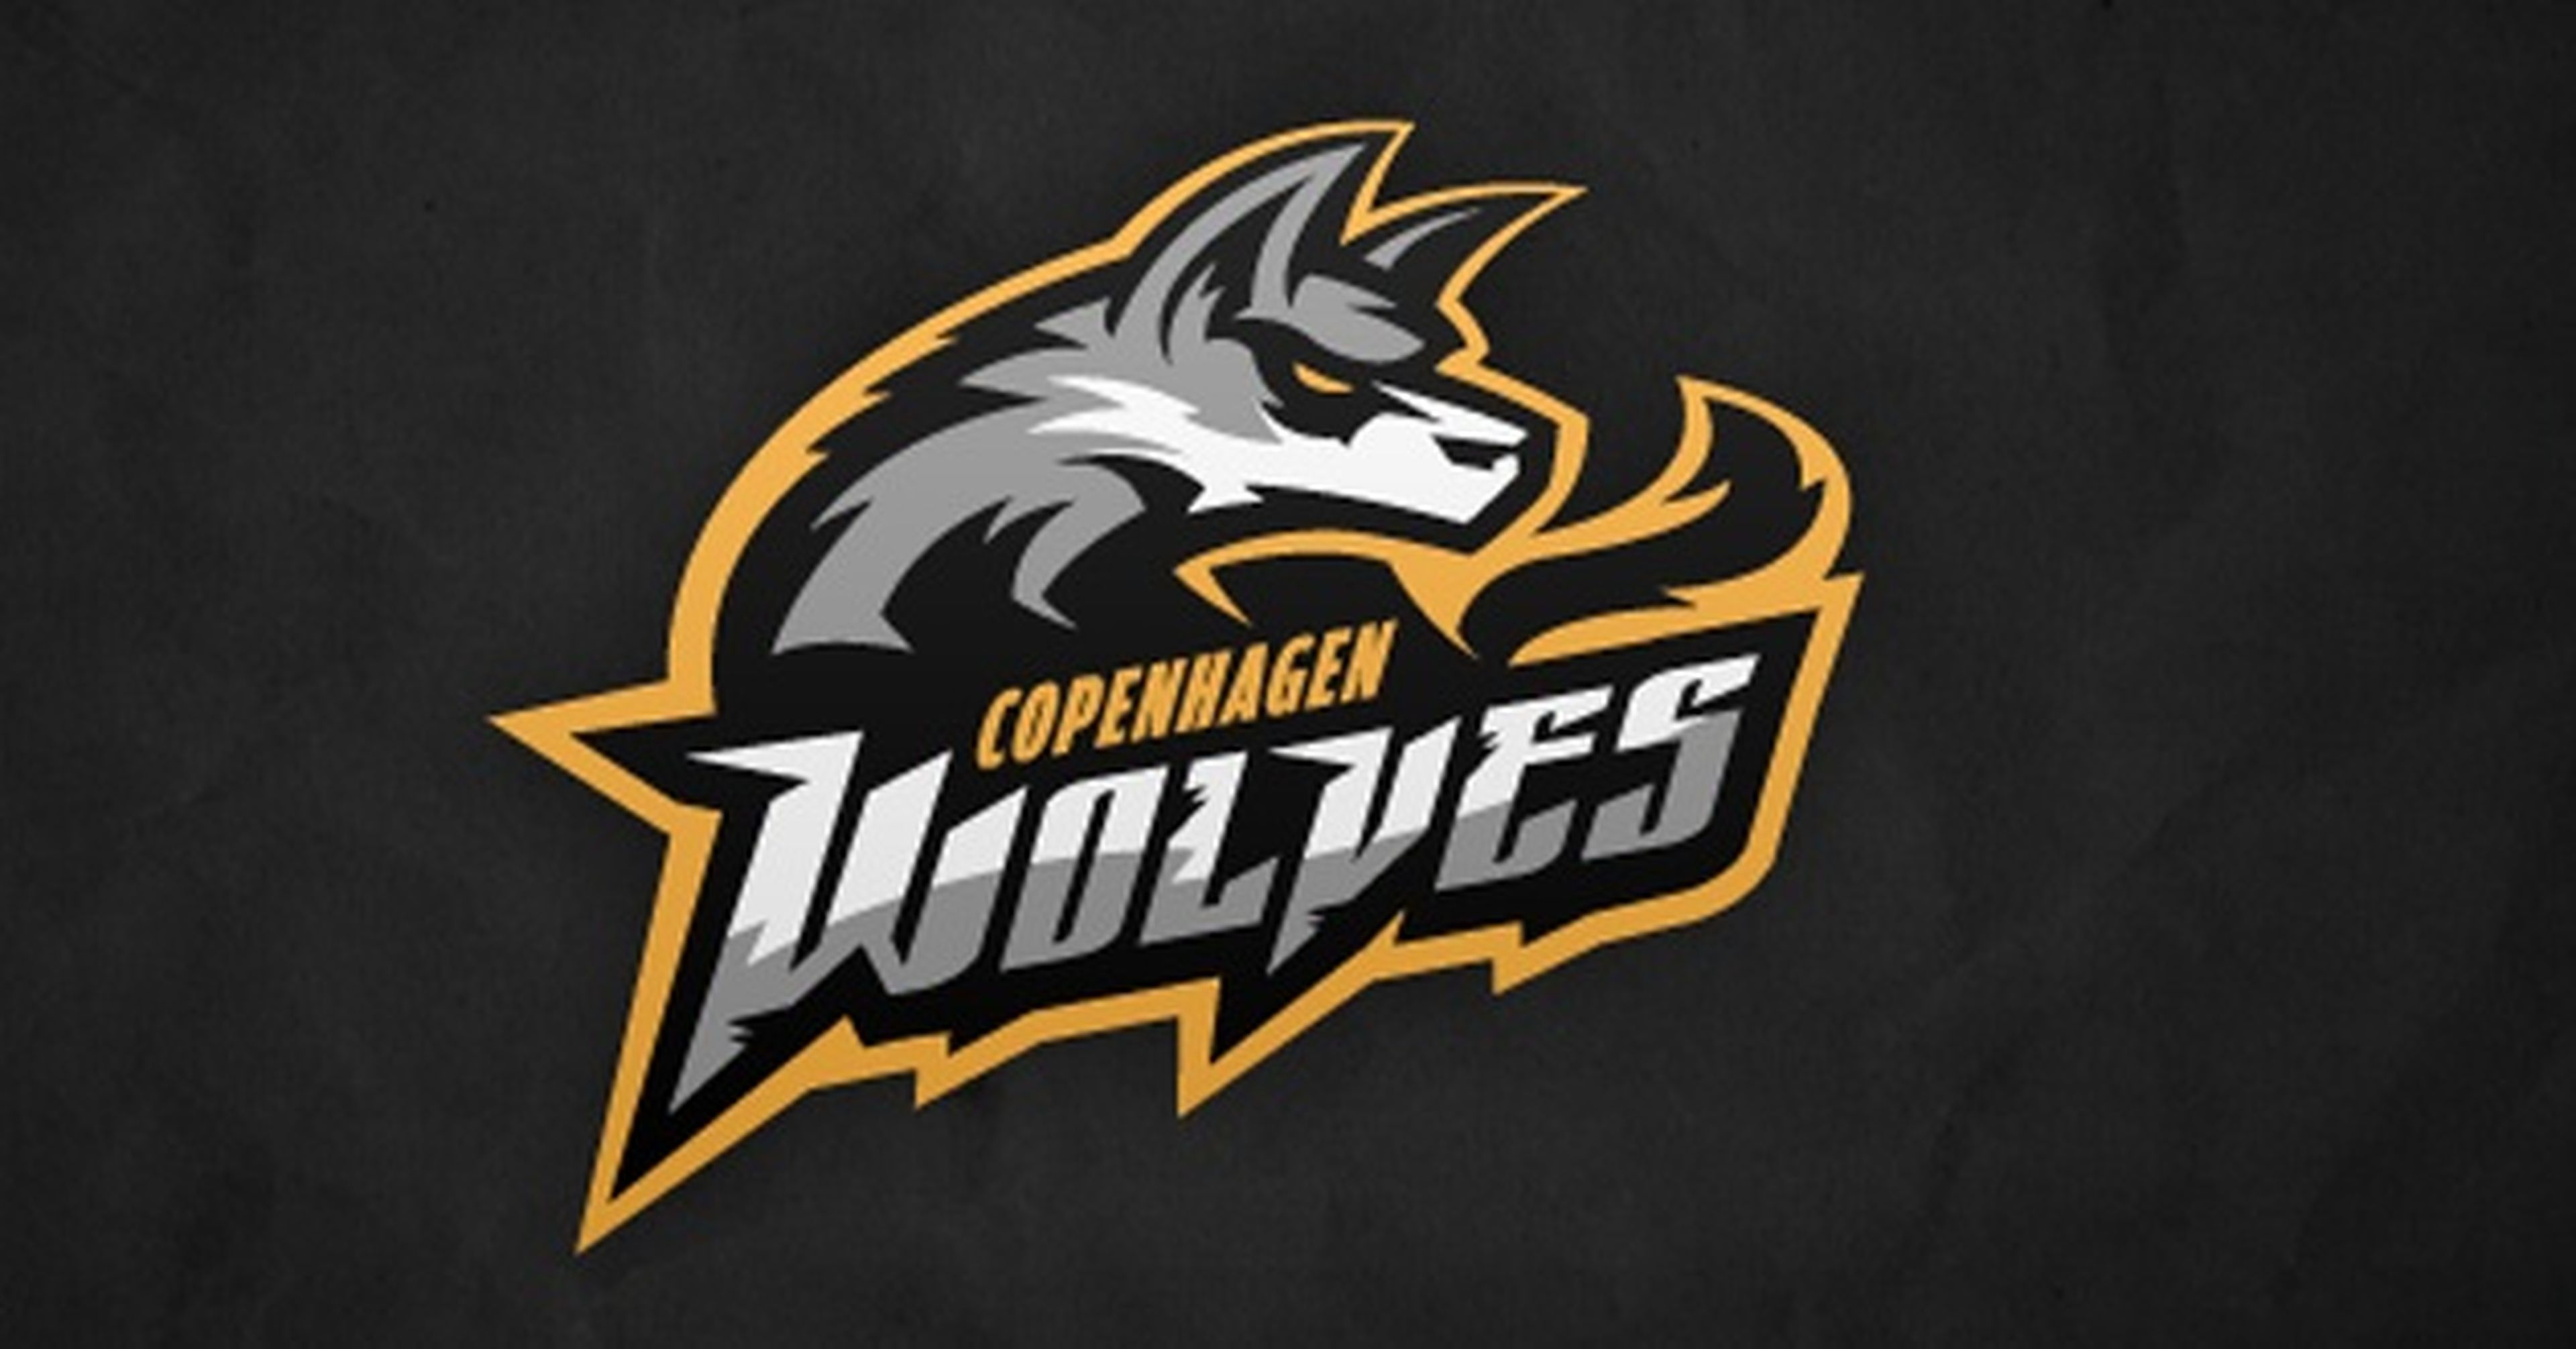 Nuevos fichajes en Copenhagen Wolves